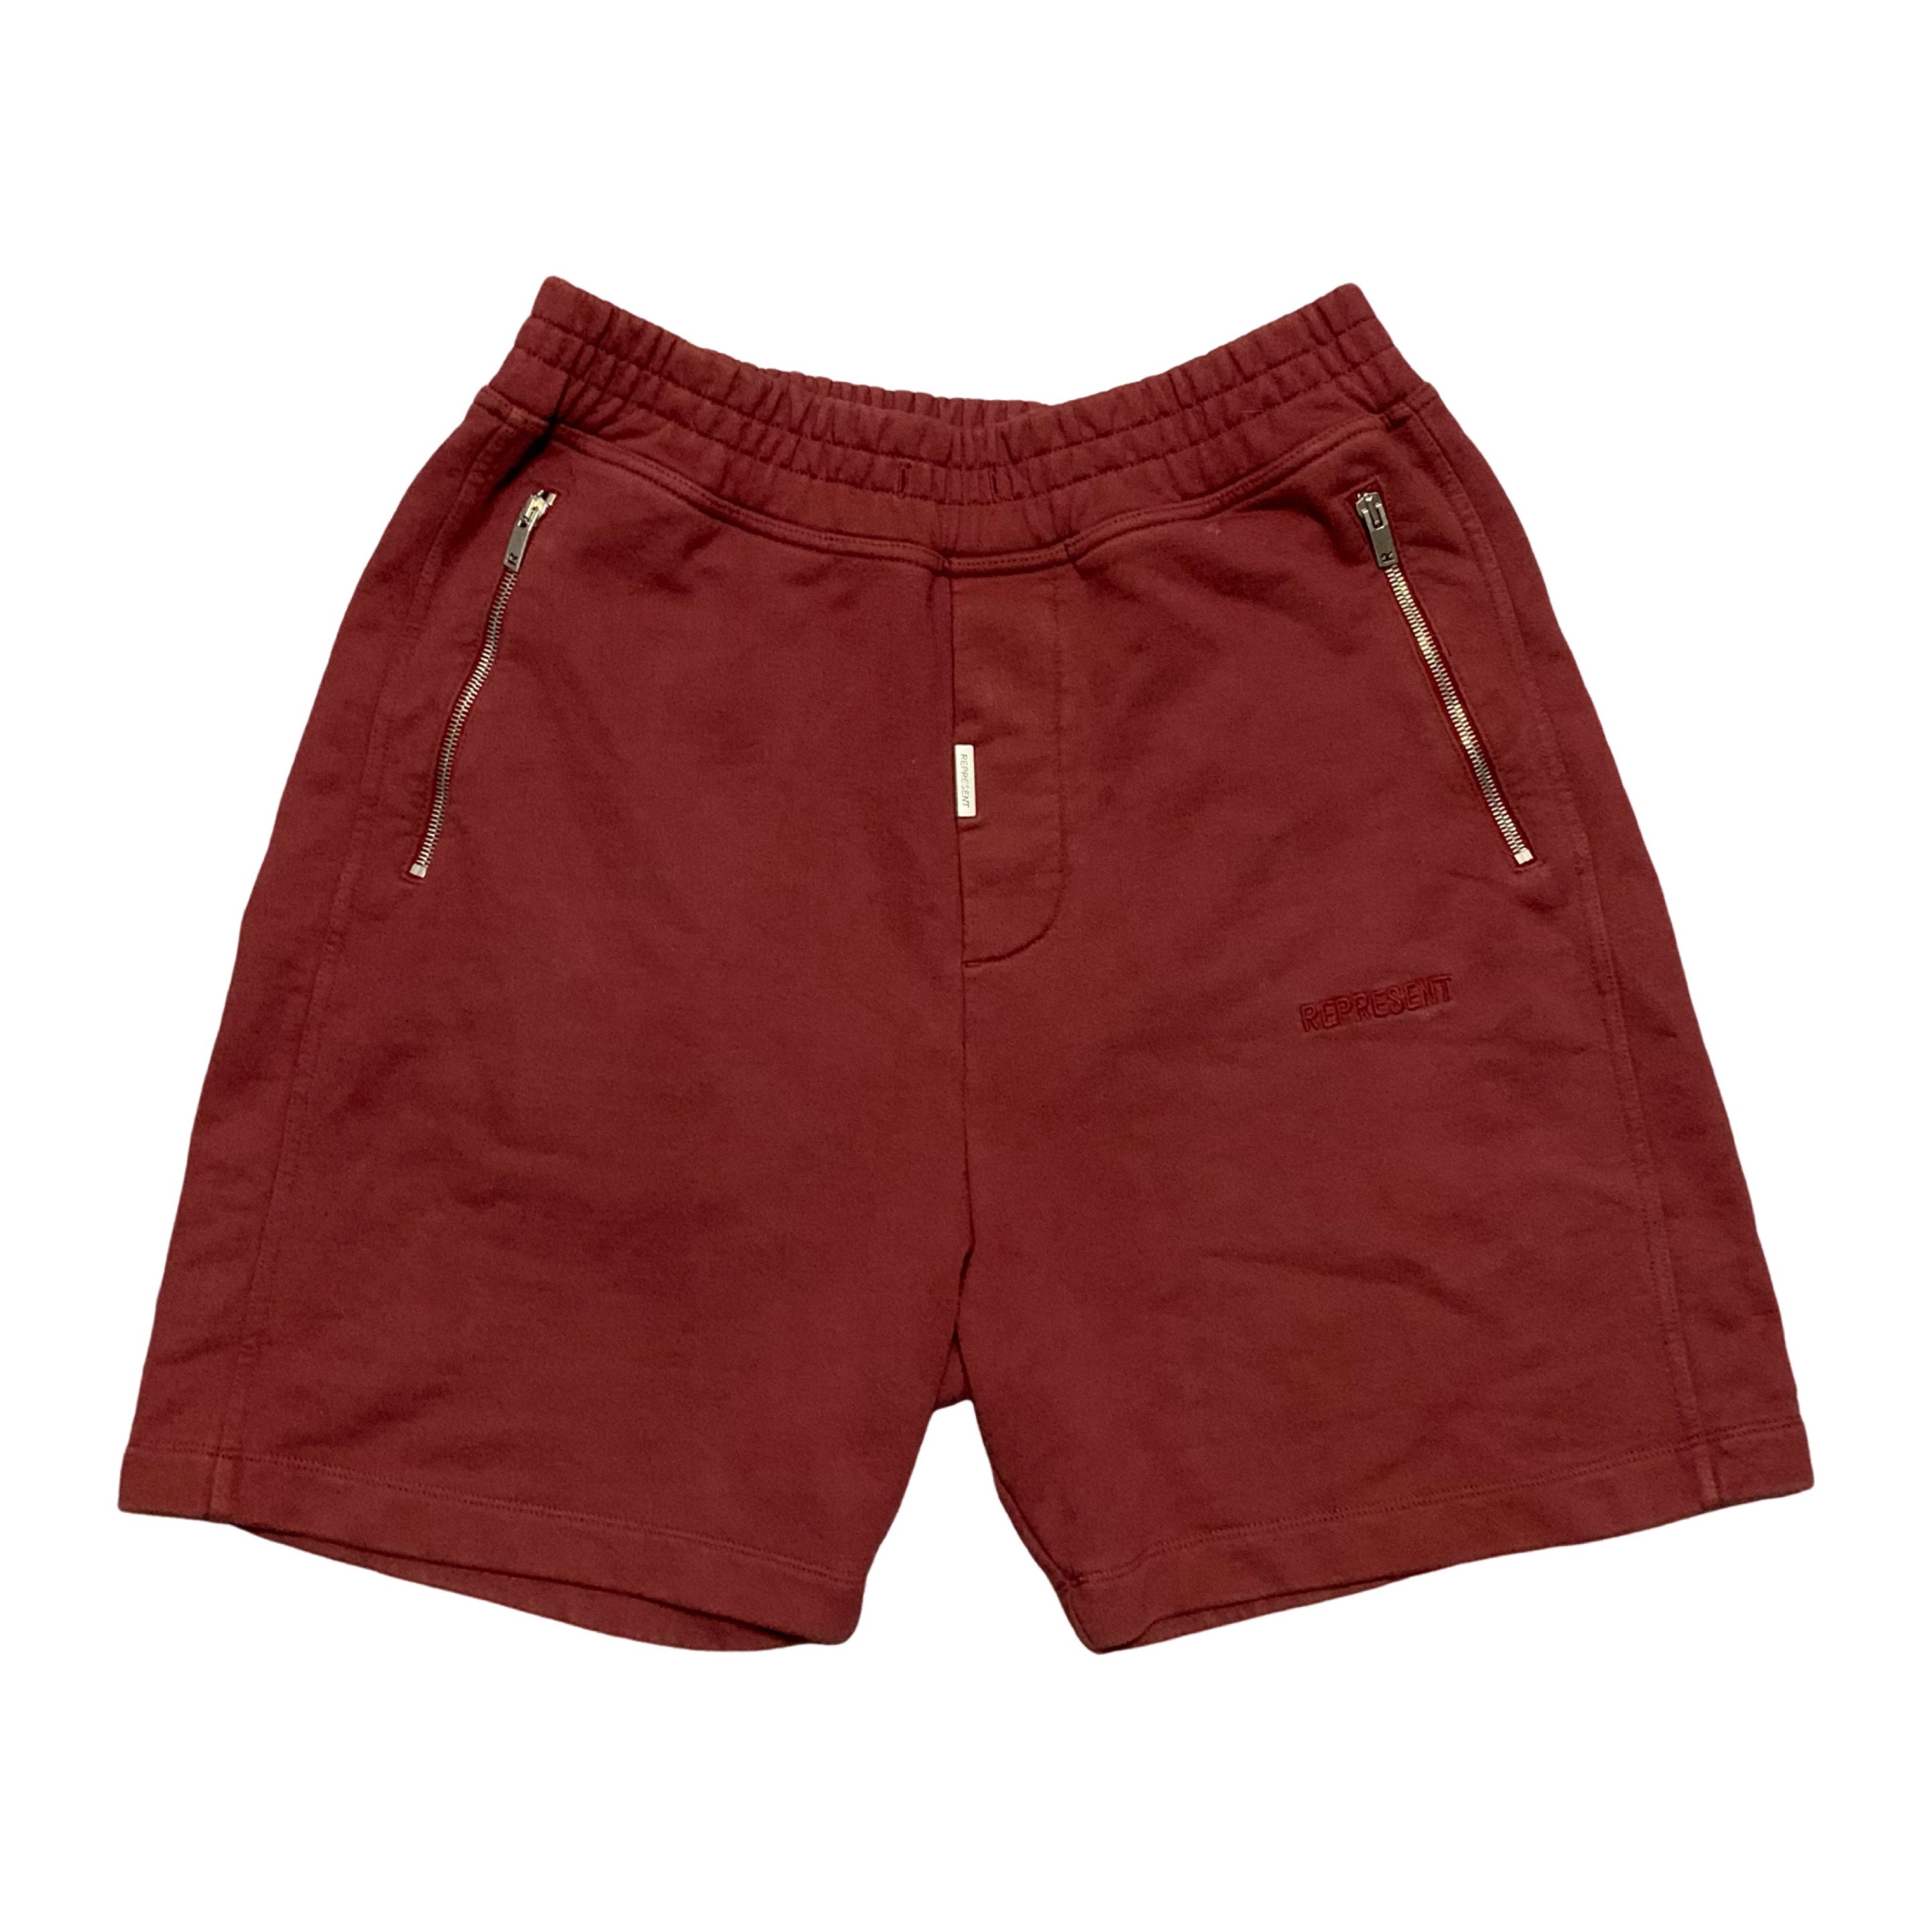 Represent Large Blanks Shorts Vintage Red Bottoms